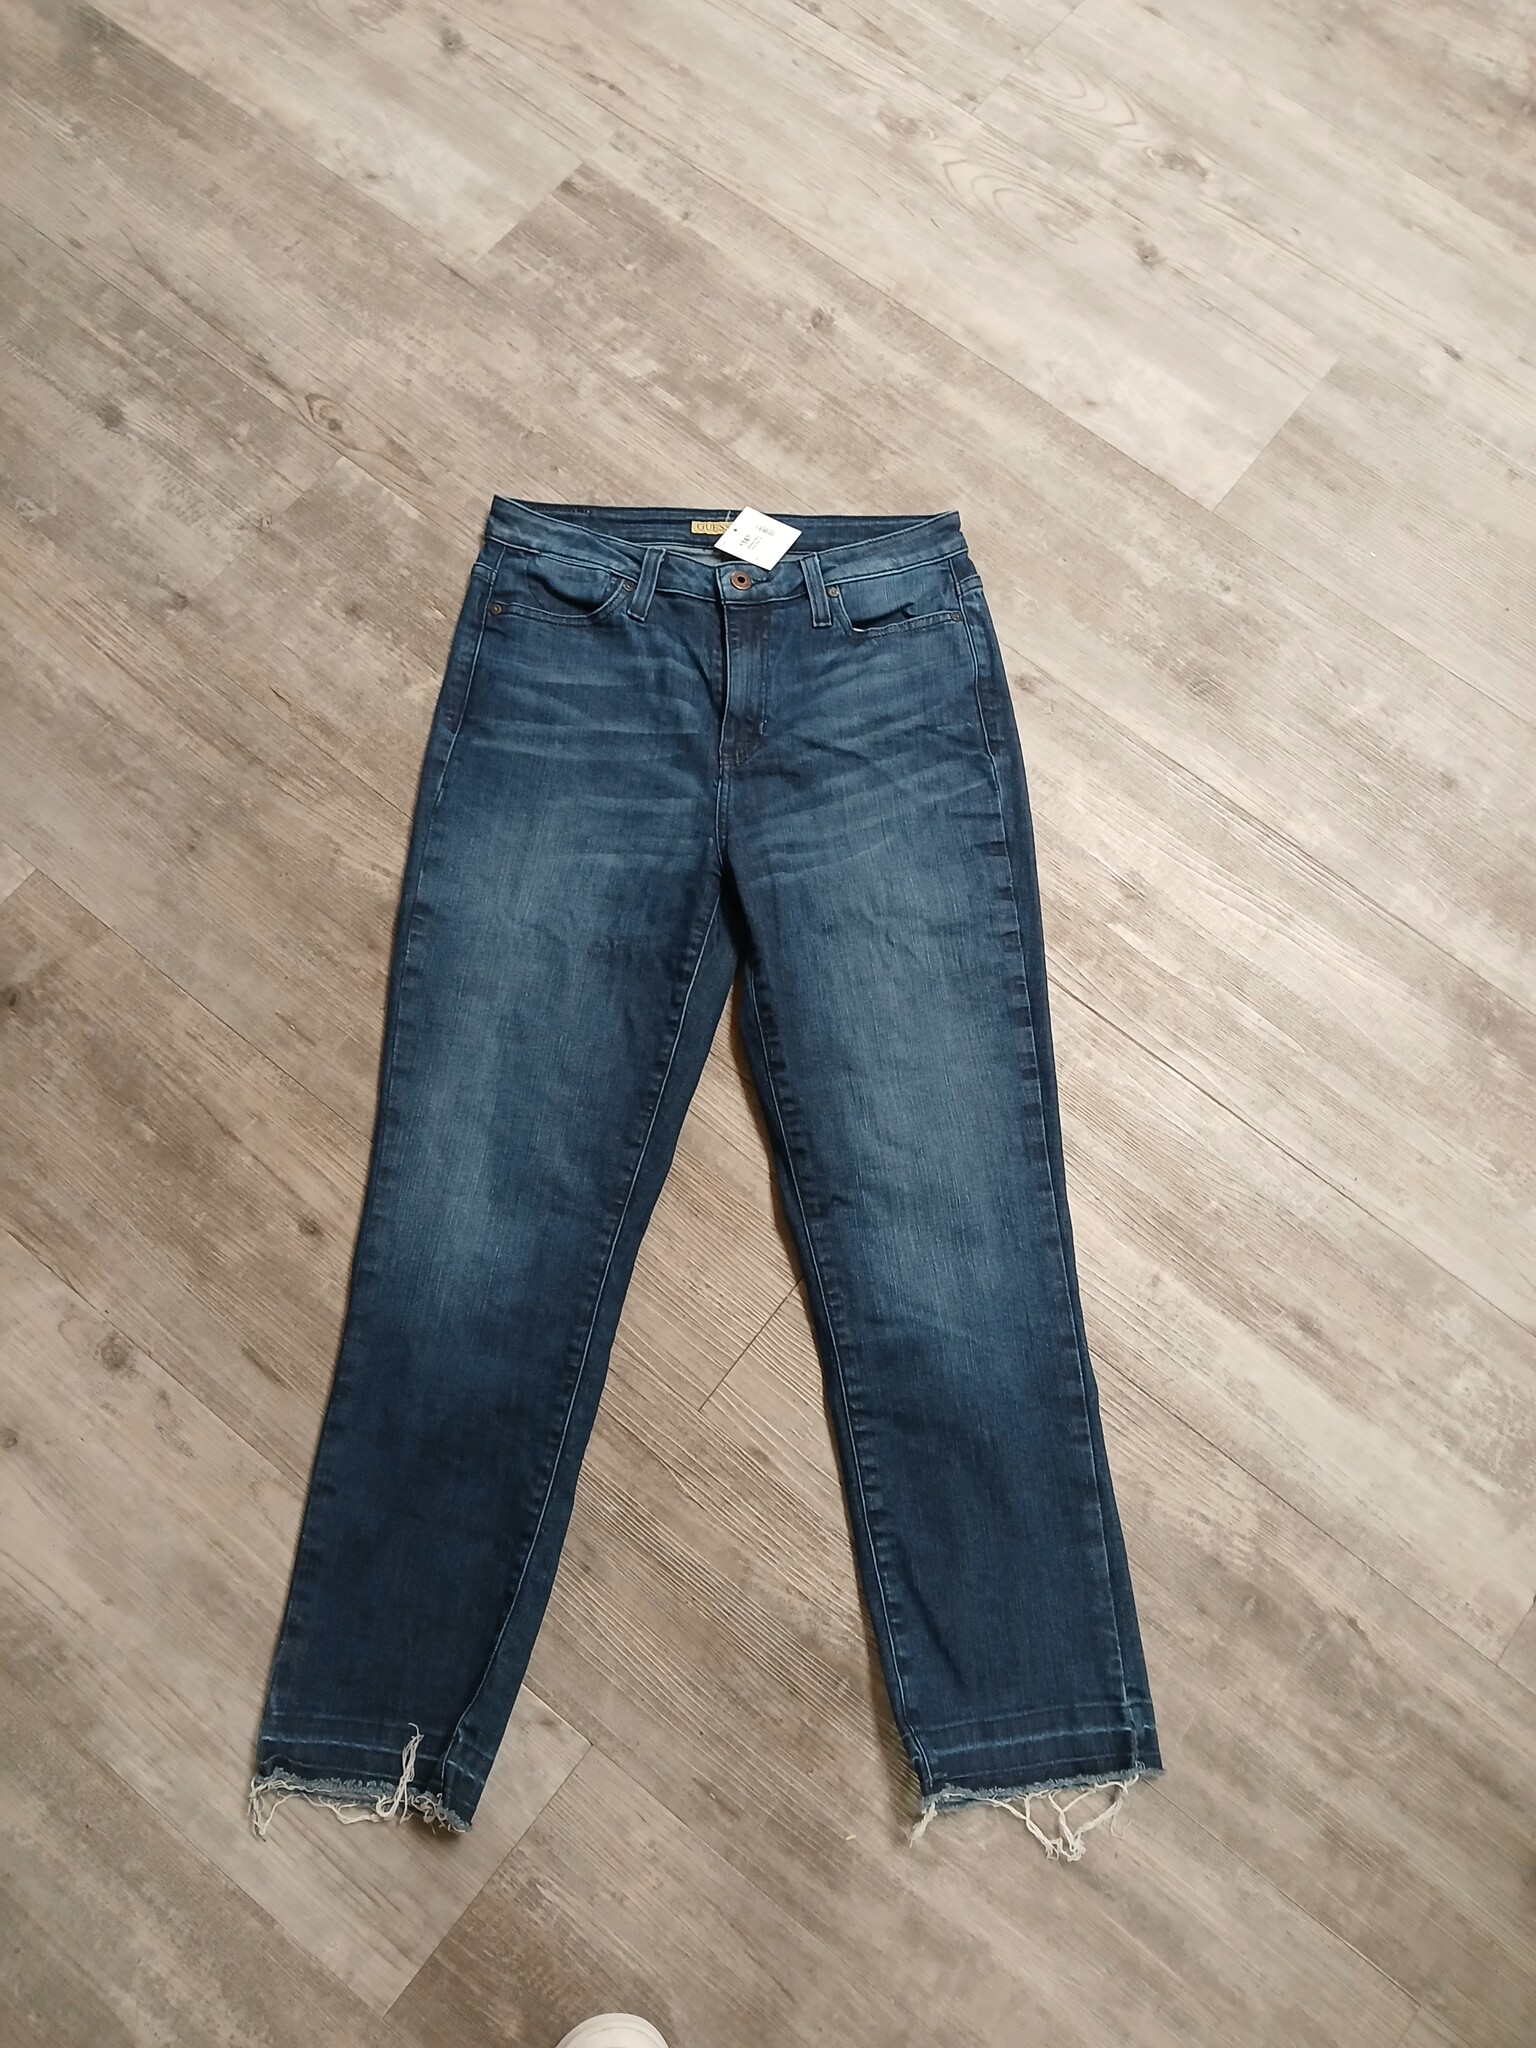 Medium Blue Jeans Size 30